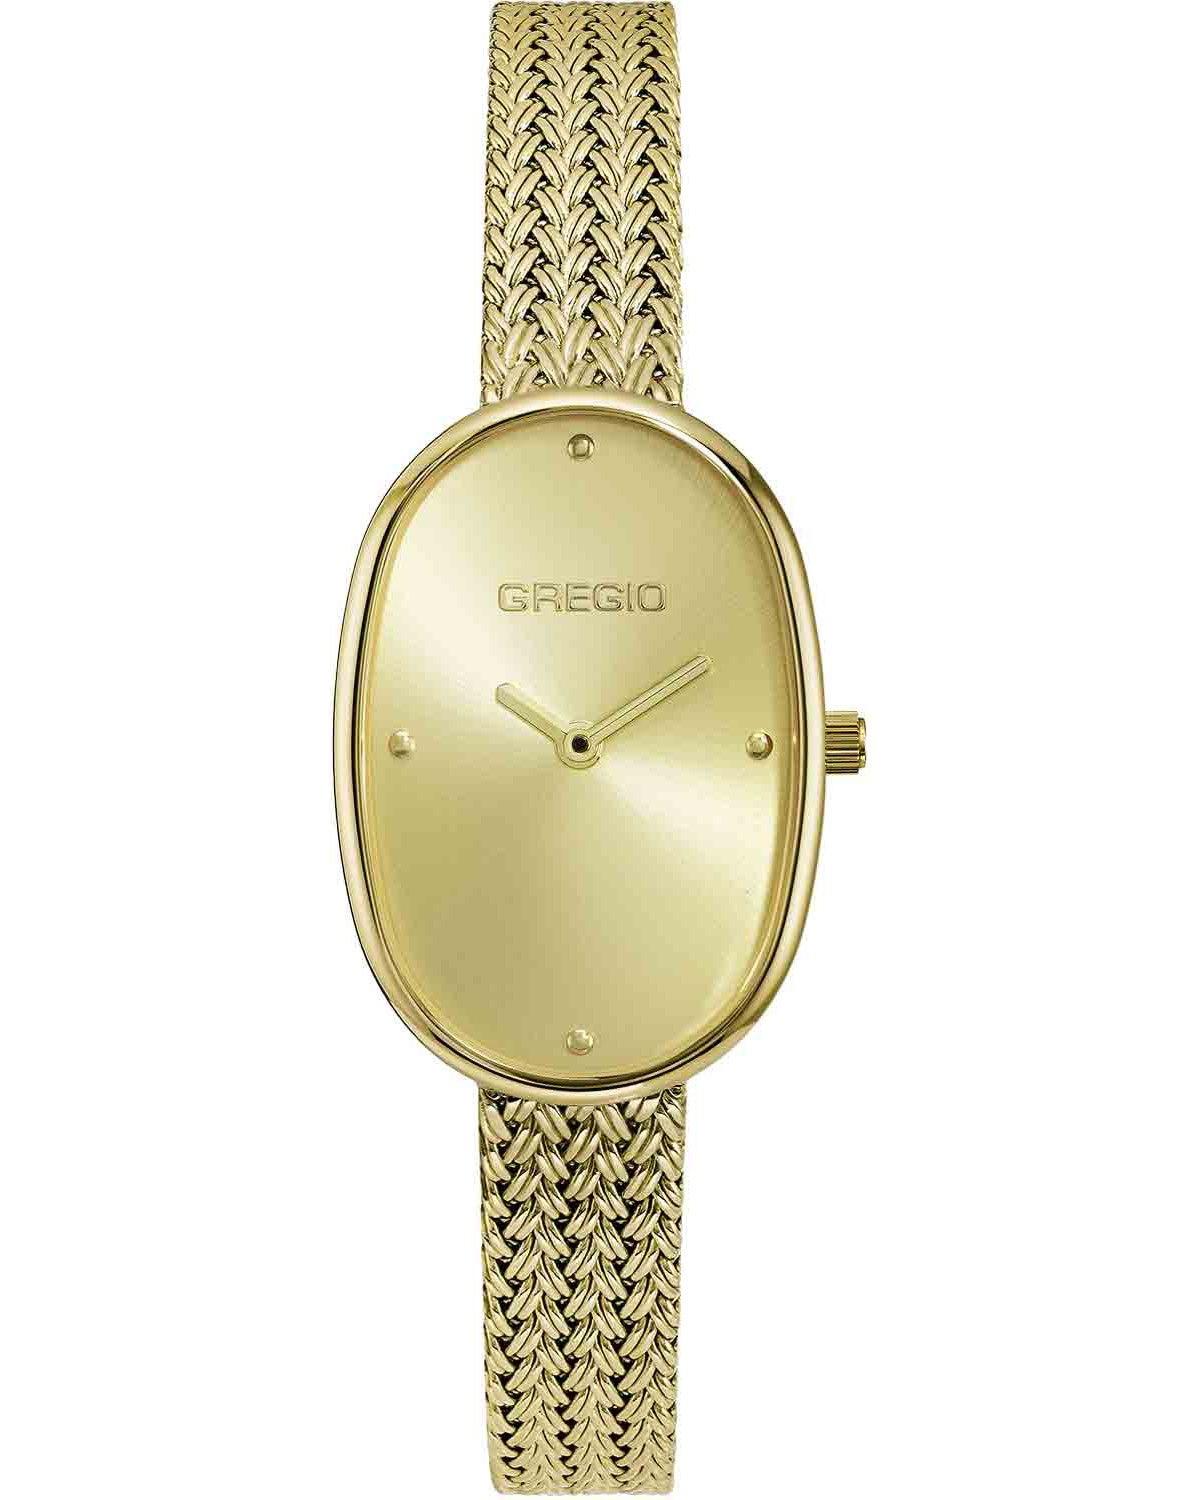 GREGIO Aveline - GR380020, Gold case with Stainless Steel Bracelet